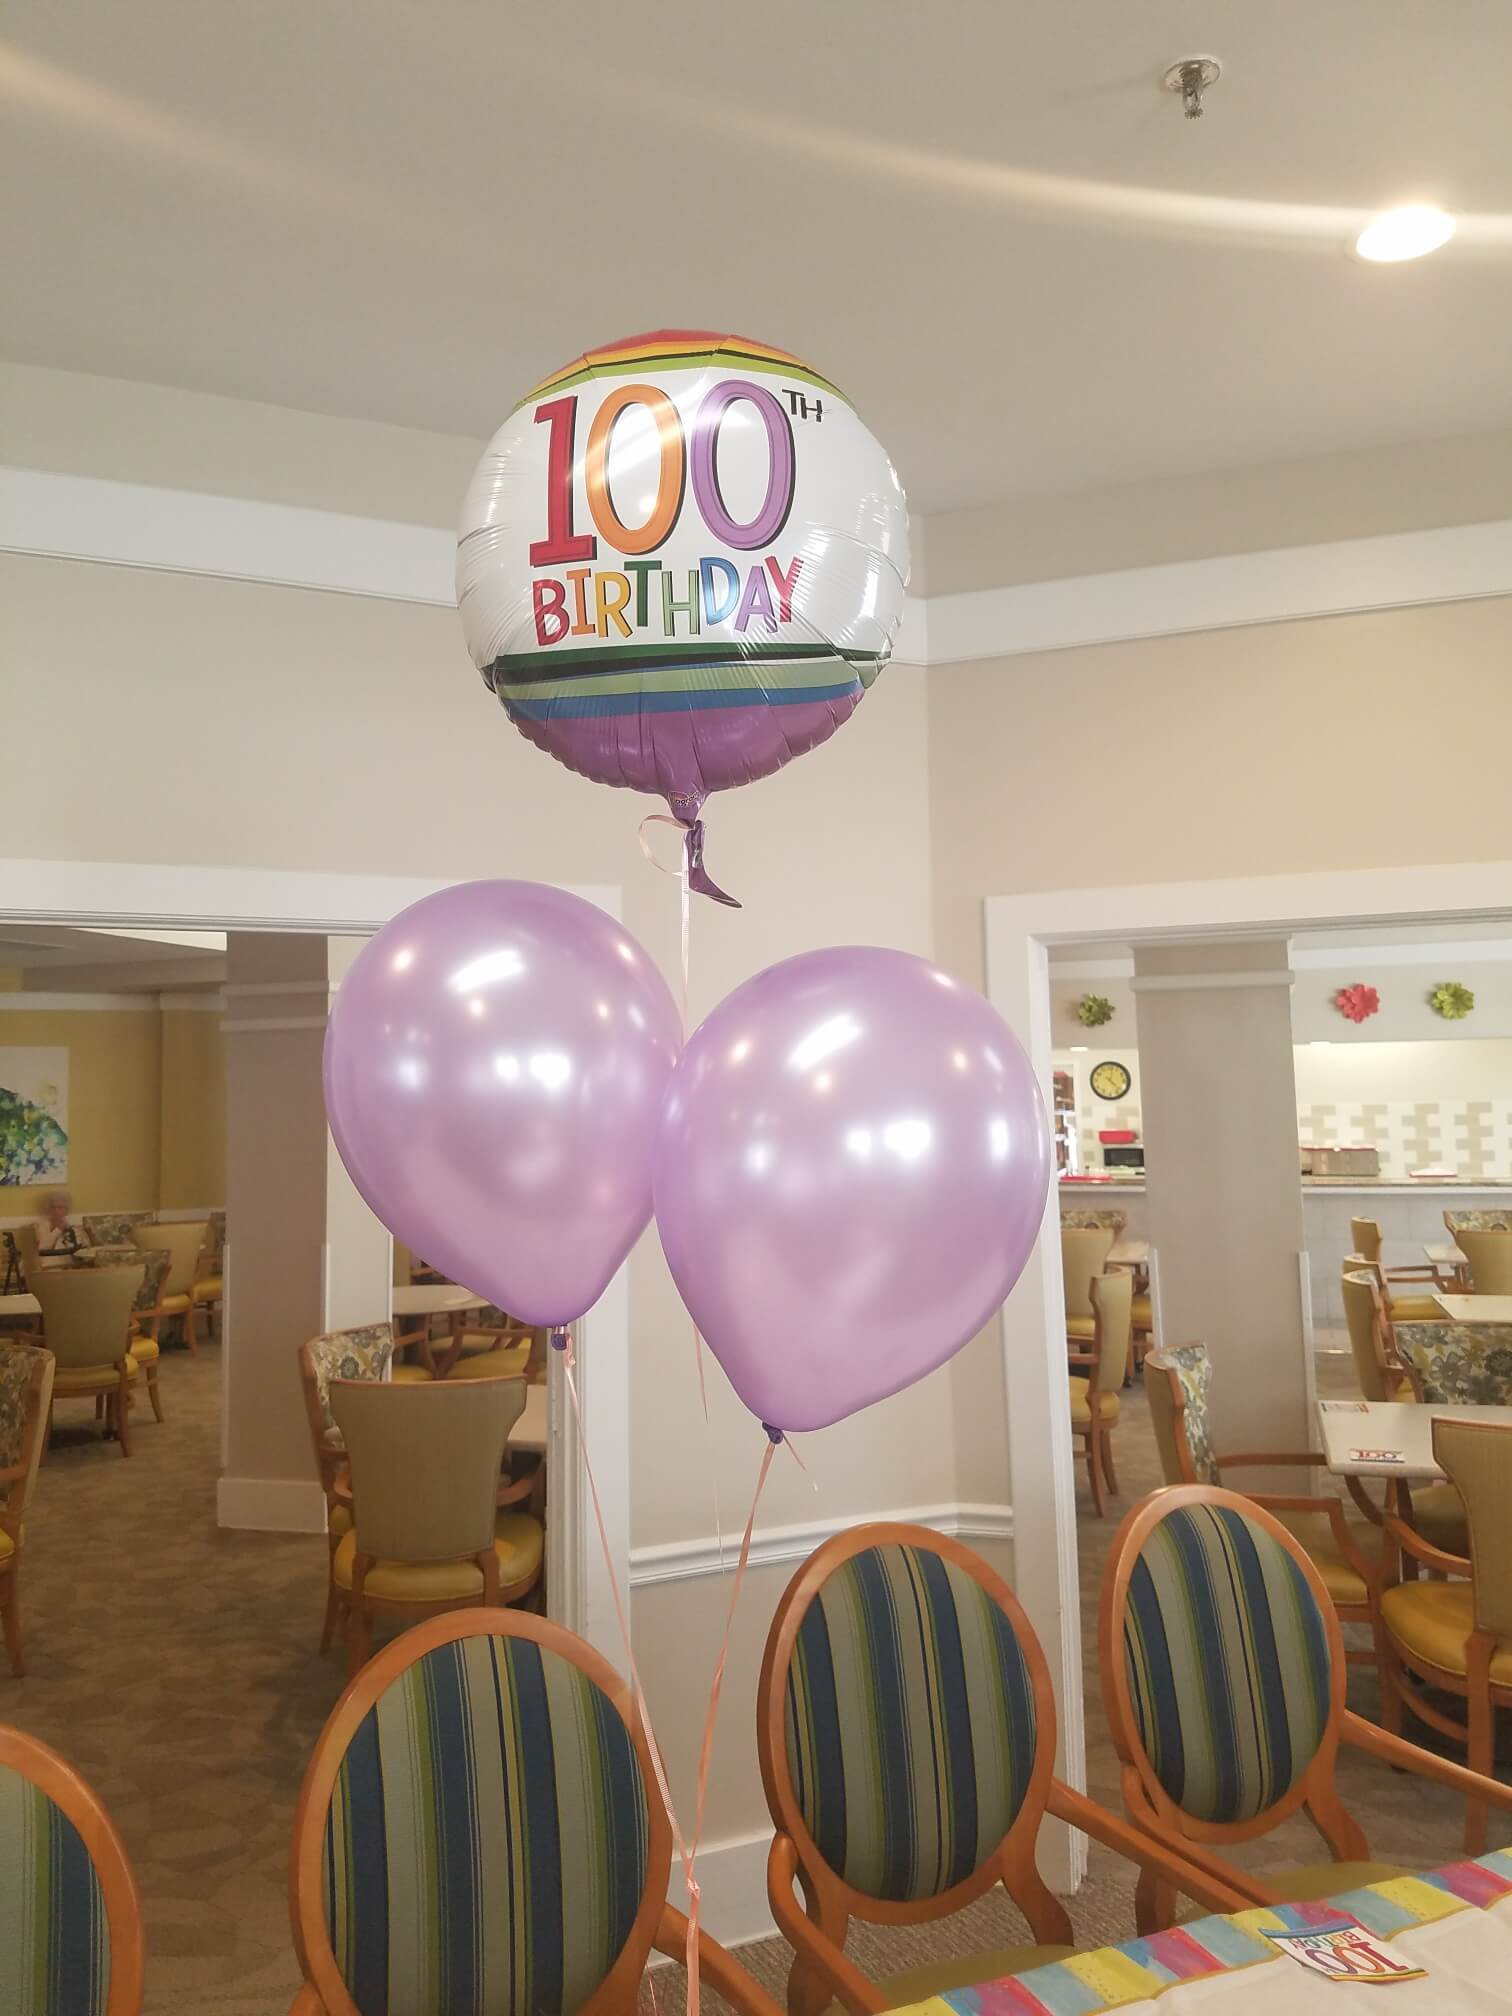 100th birthday balloons